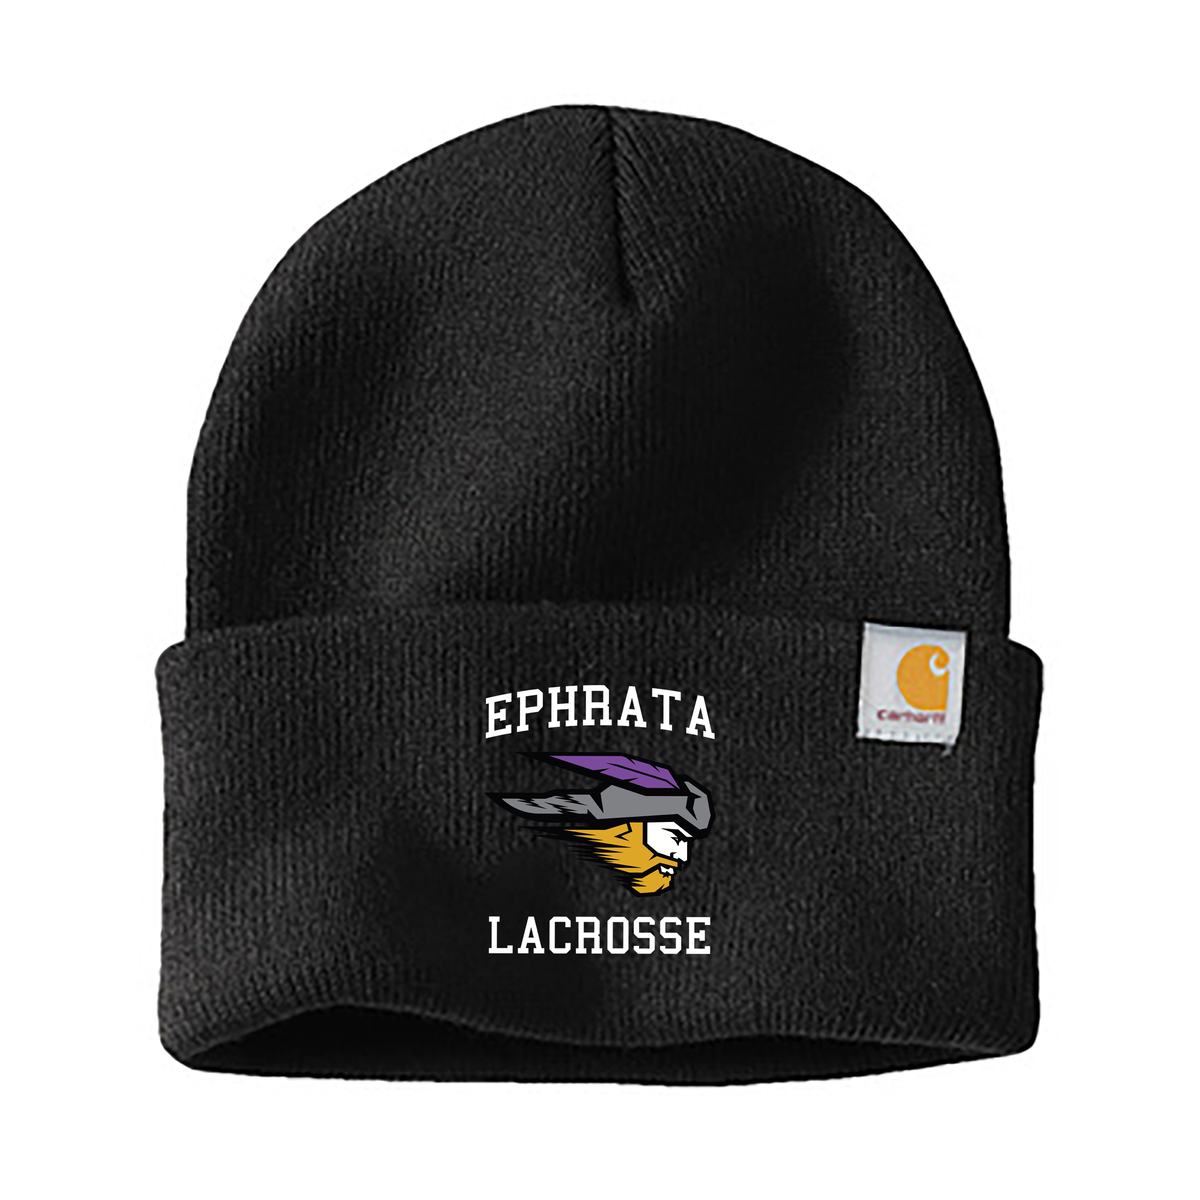 Ephrata Lacrosse Carhartt Beanie